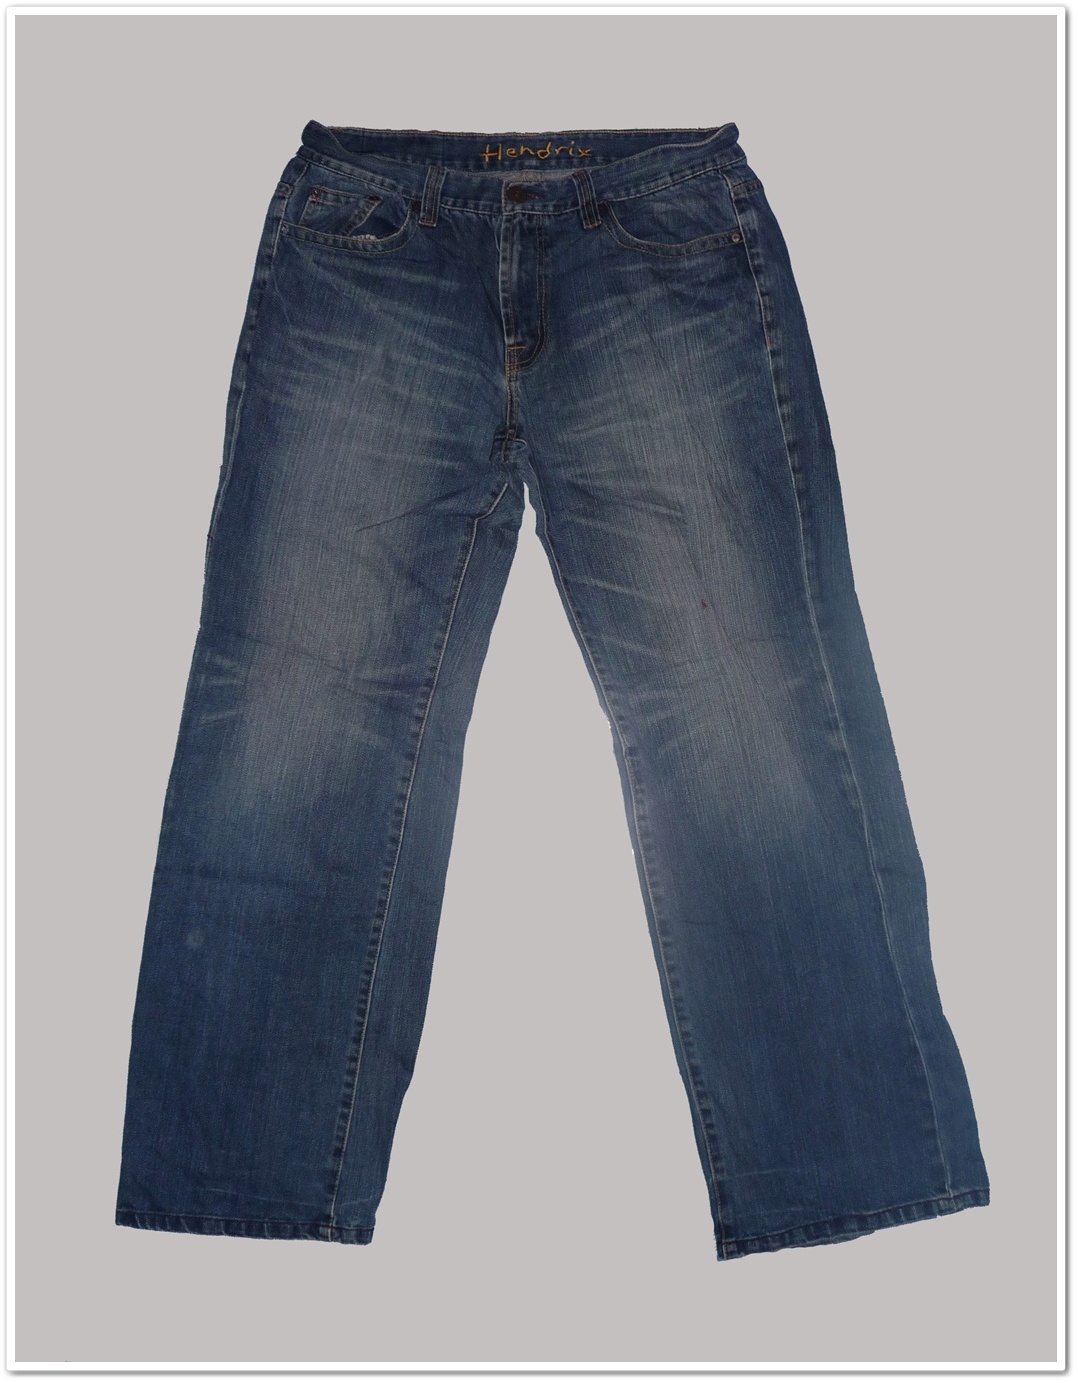 Dallek Shop - Bundle Online Shoping: Jimi Hendrix Jeans